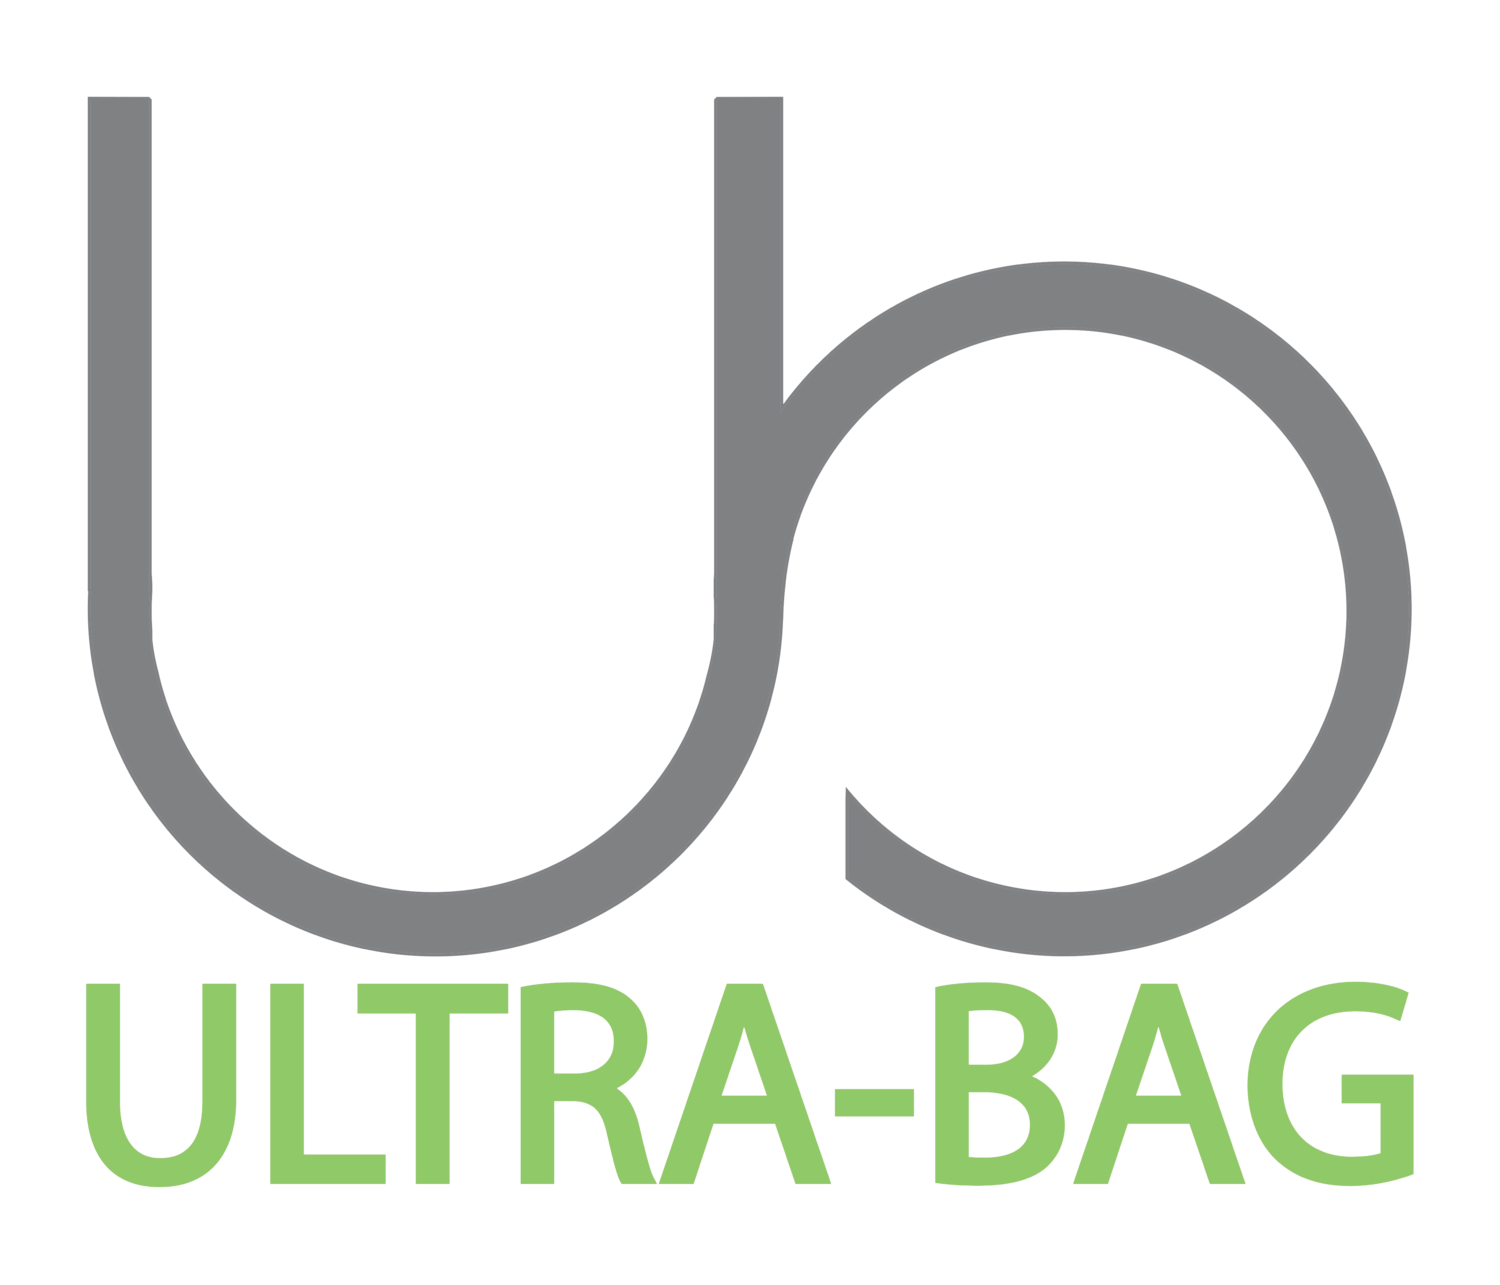 ULTRA BAG